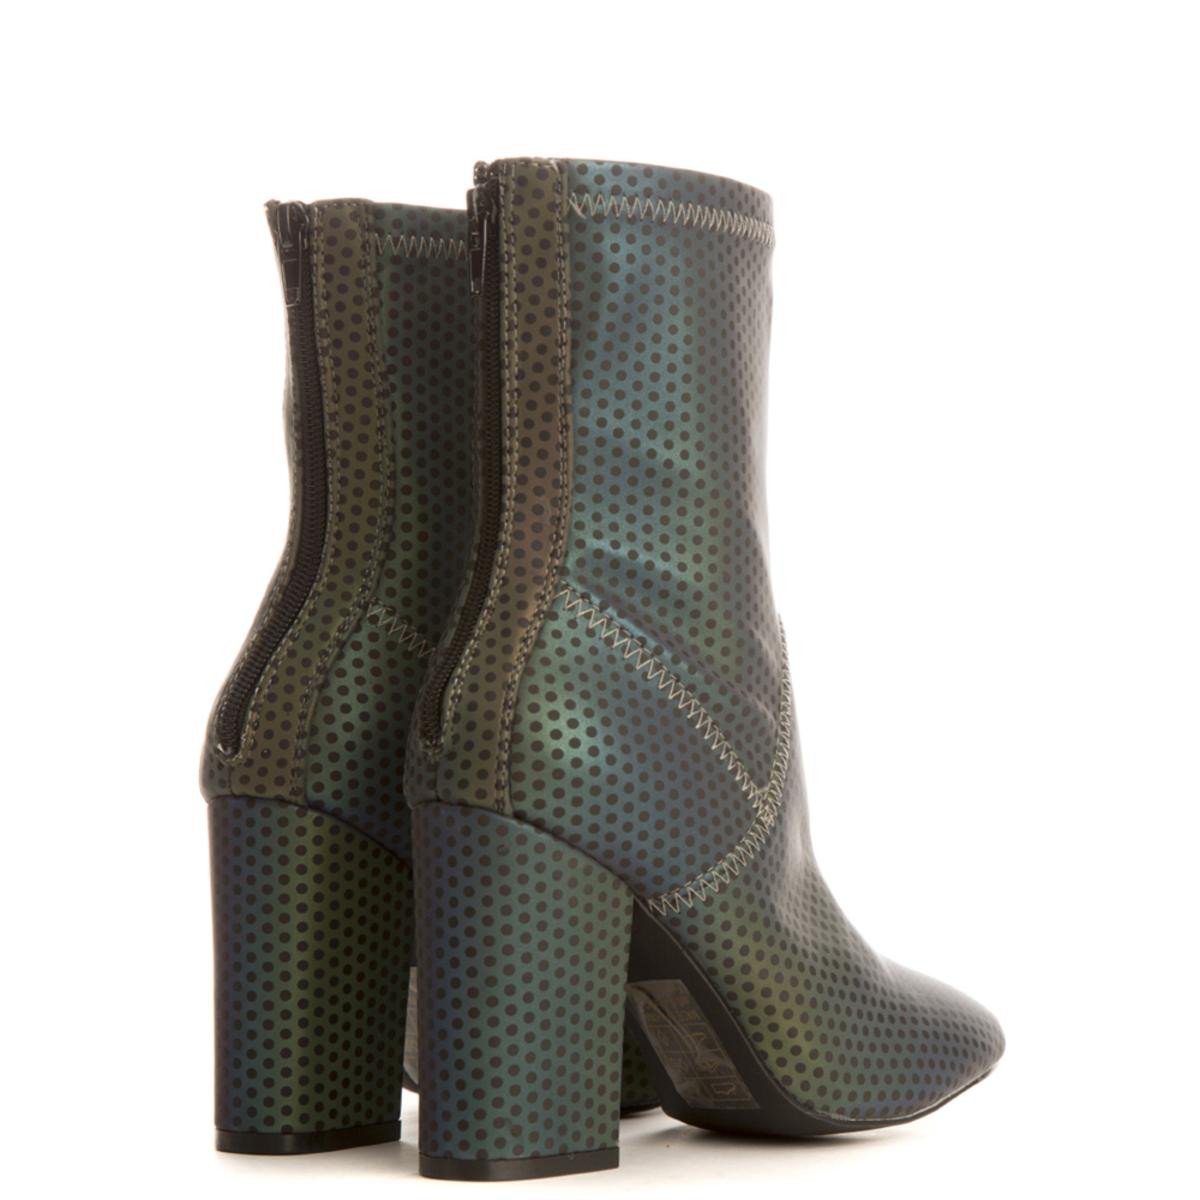 Y.R.U. for Women: Diive Reflective Heel Boots